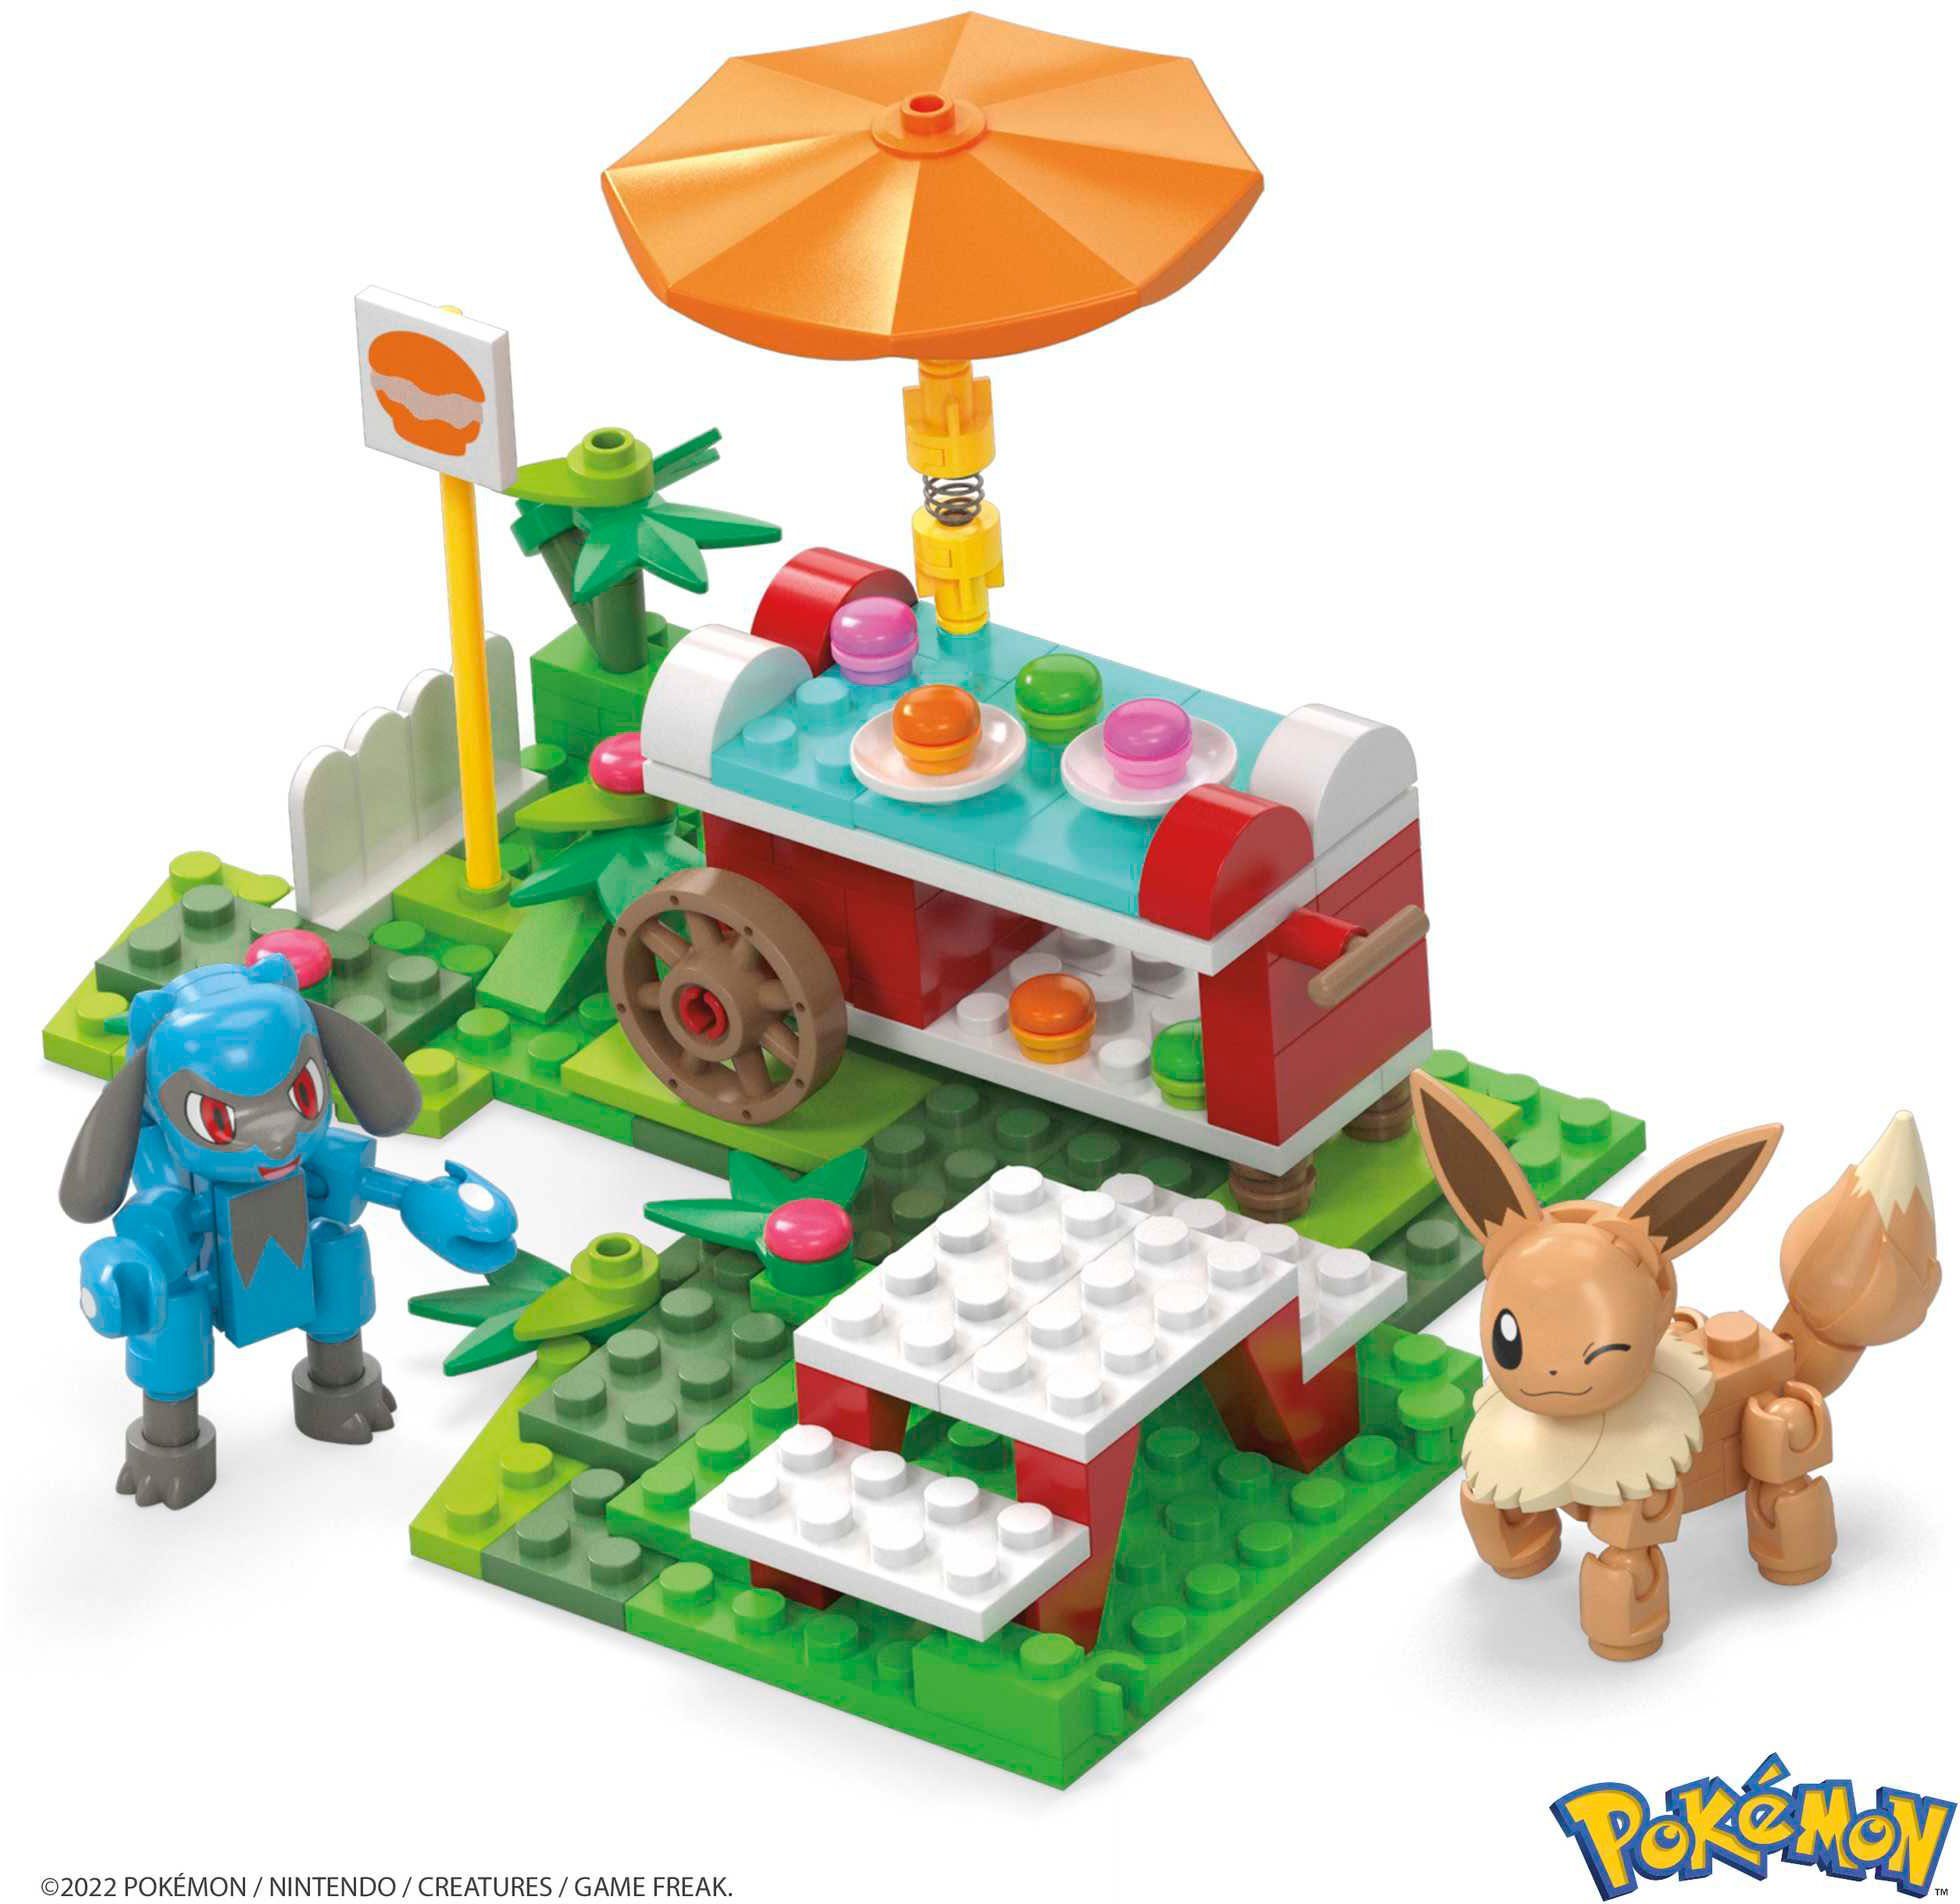 Abenteuer Konstruktions-Spielset Picknick MEGA Bauset Pokémon